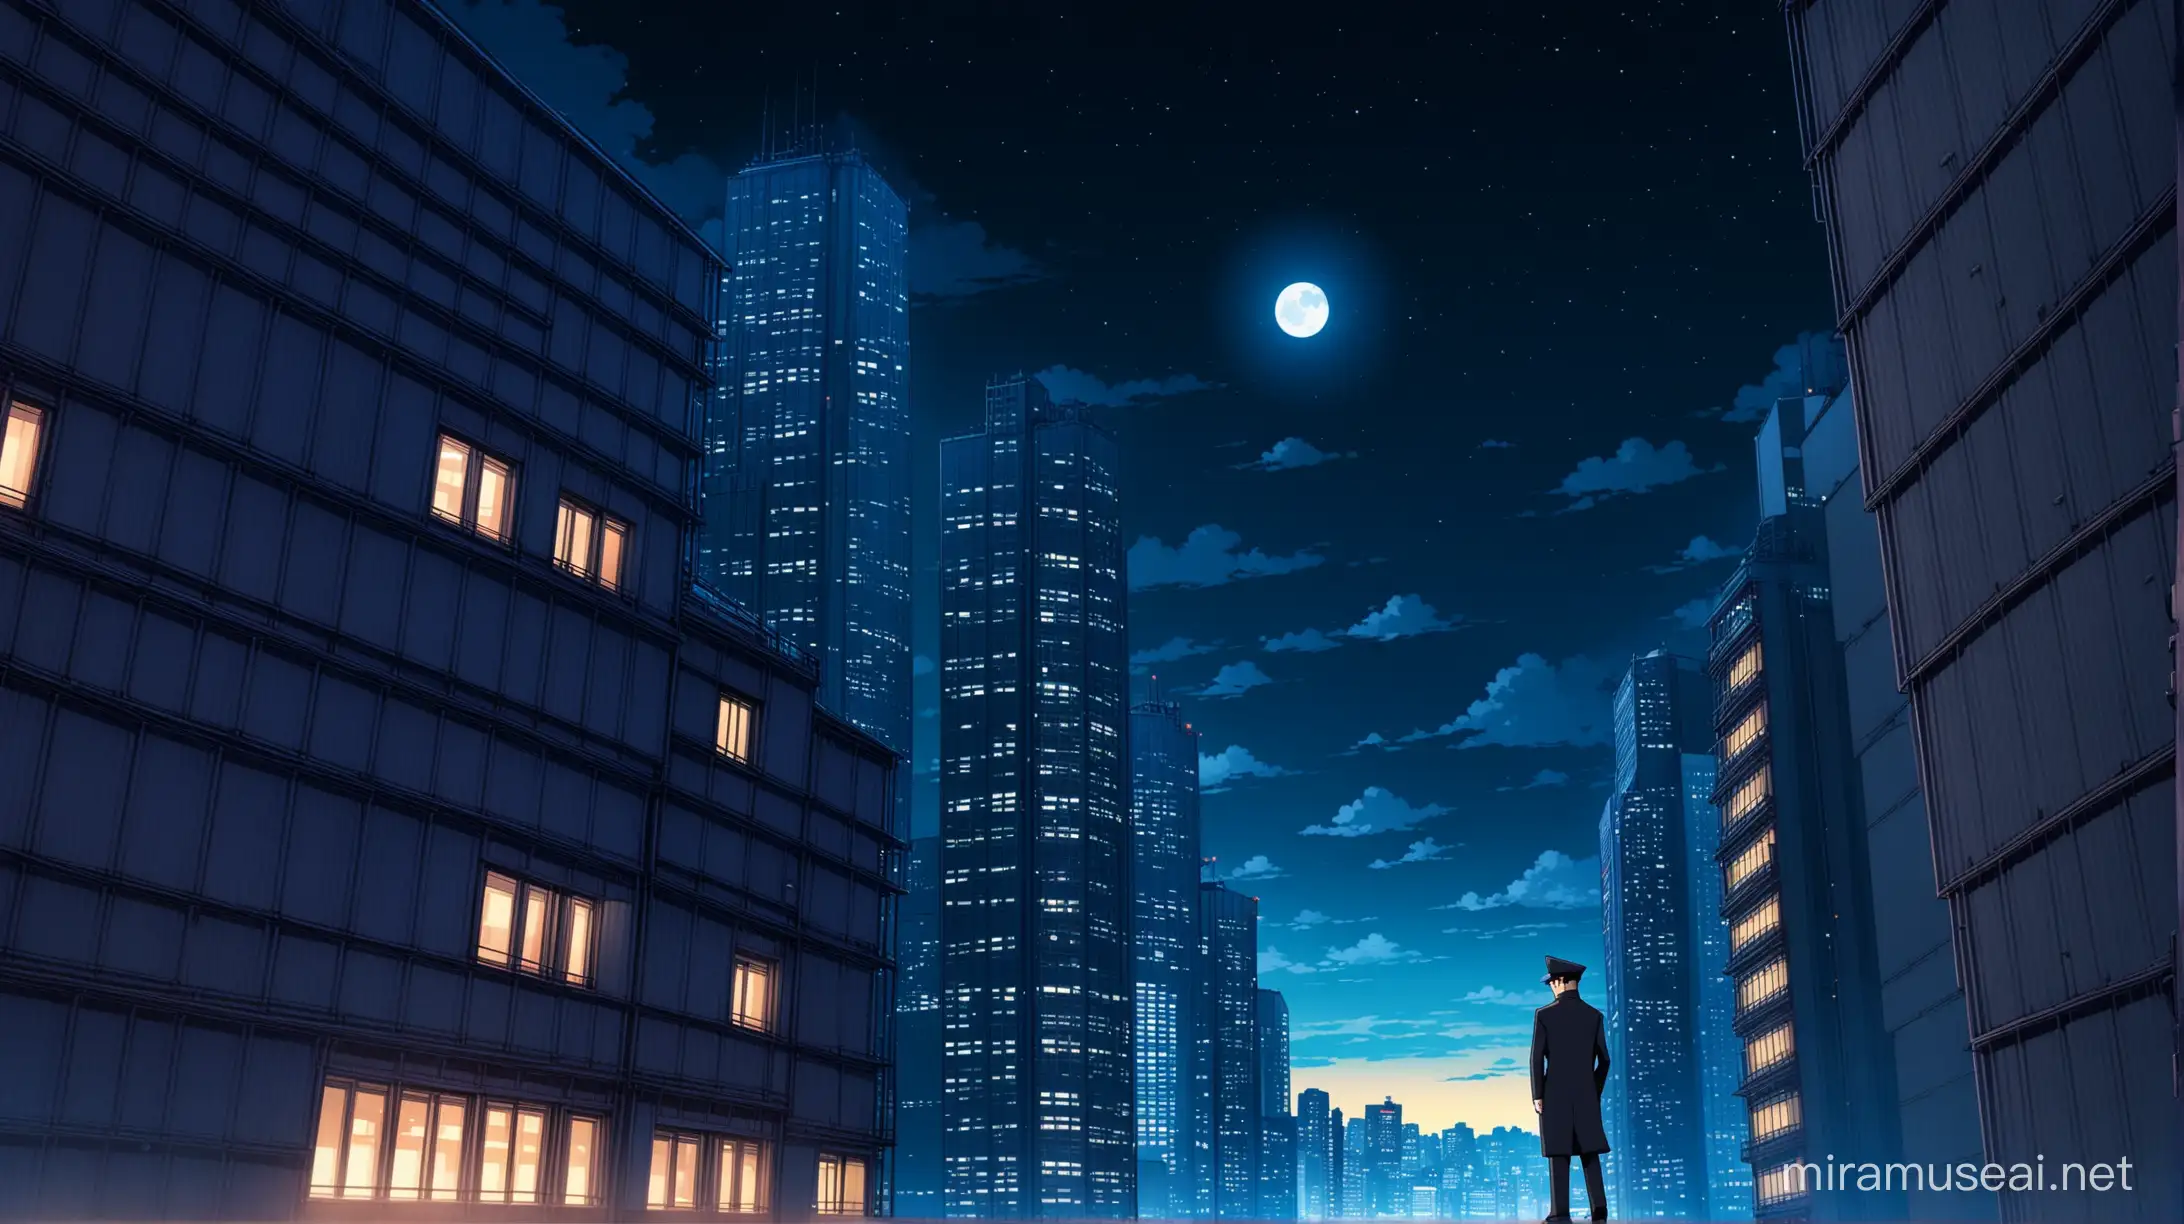 AnimeStyle Nighttime Espionage in Illuminated Cityscape